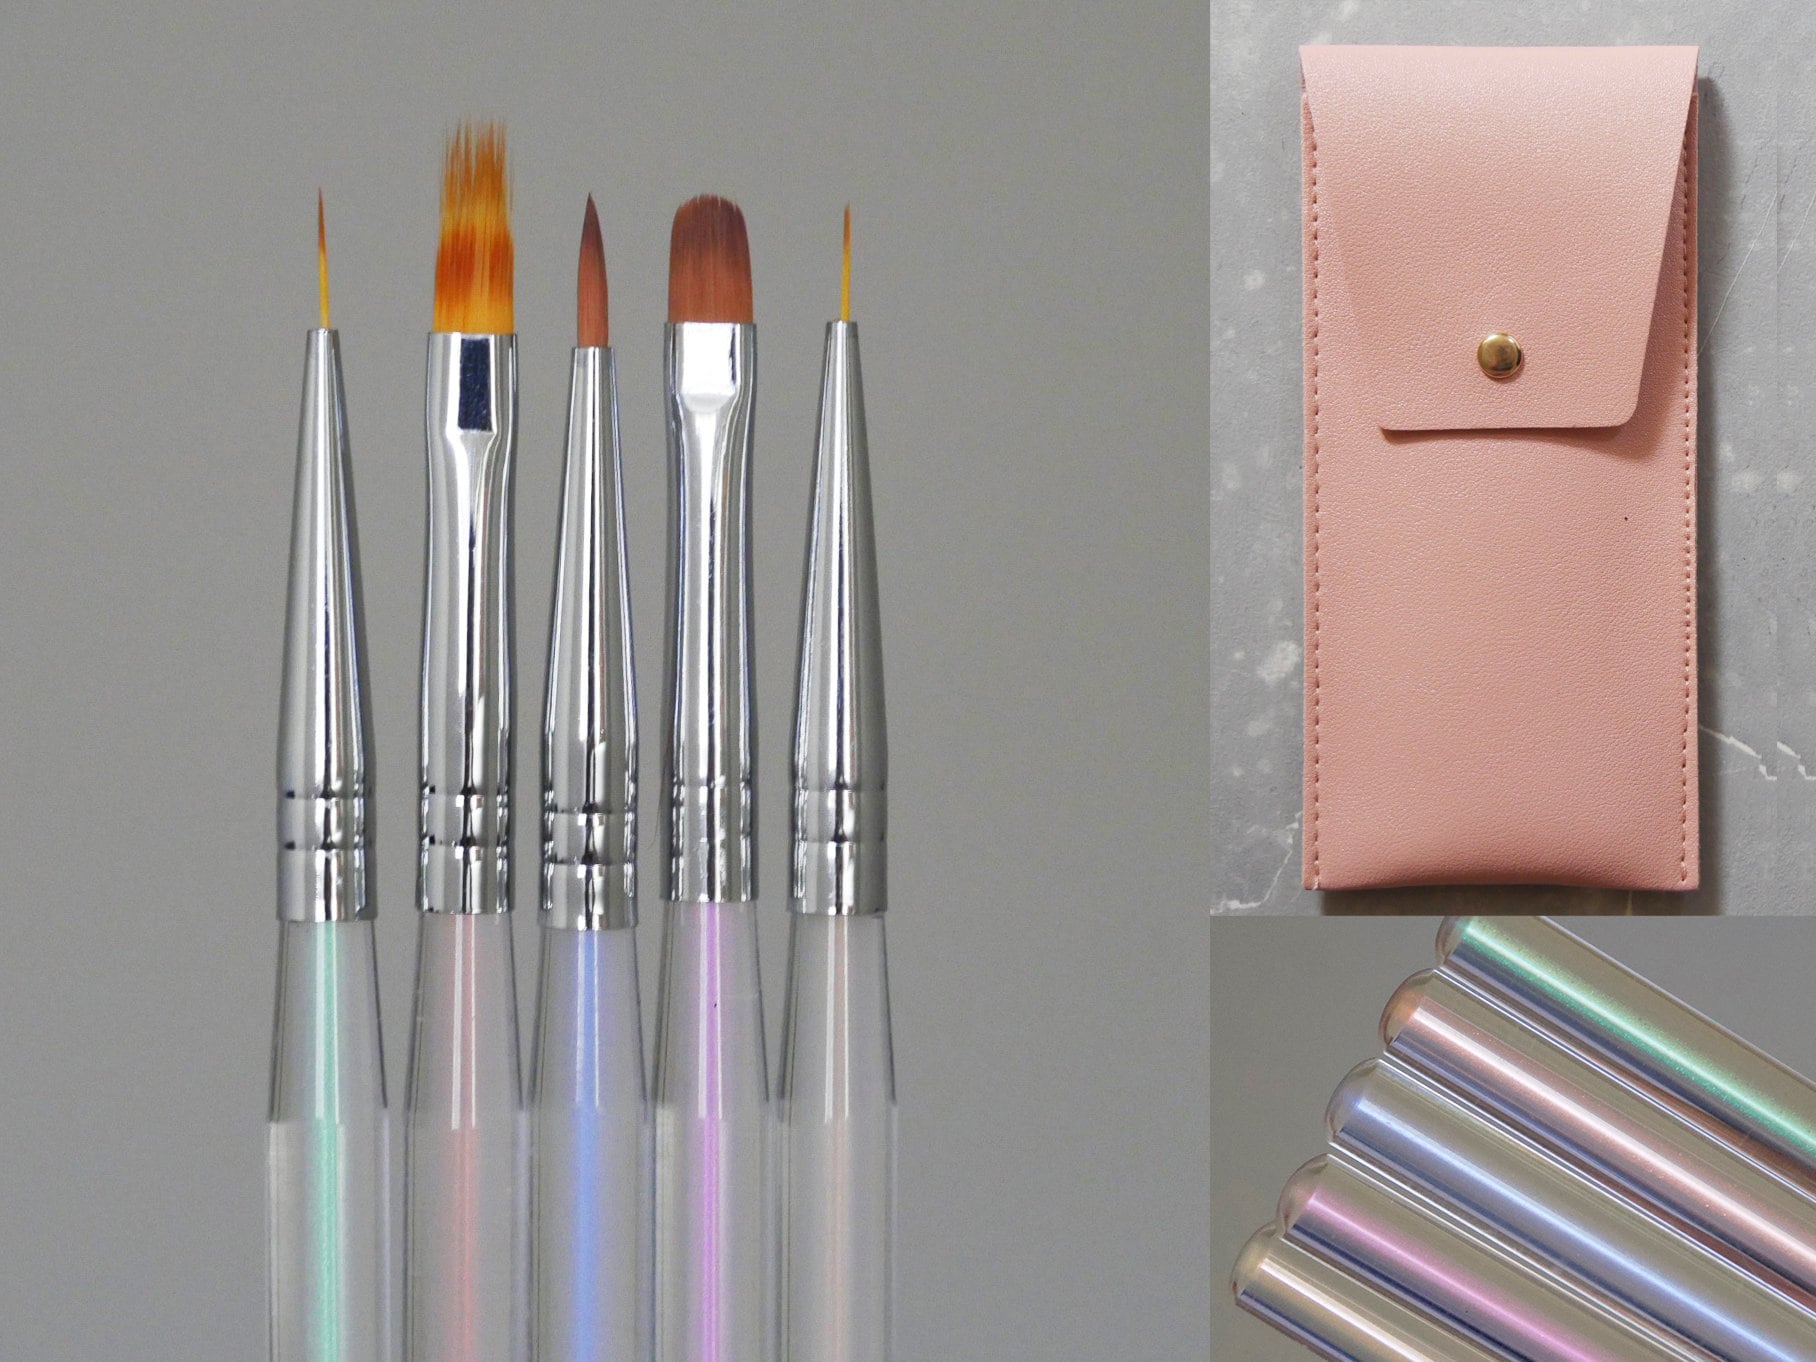 5pcs Polar Light Handle Nail Brush Set/ Detailing Striping Gel Liner Brushes, Painting Brushes, 3D Brush, Ombre Brush, With Pink Case